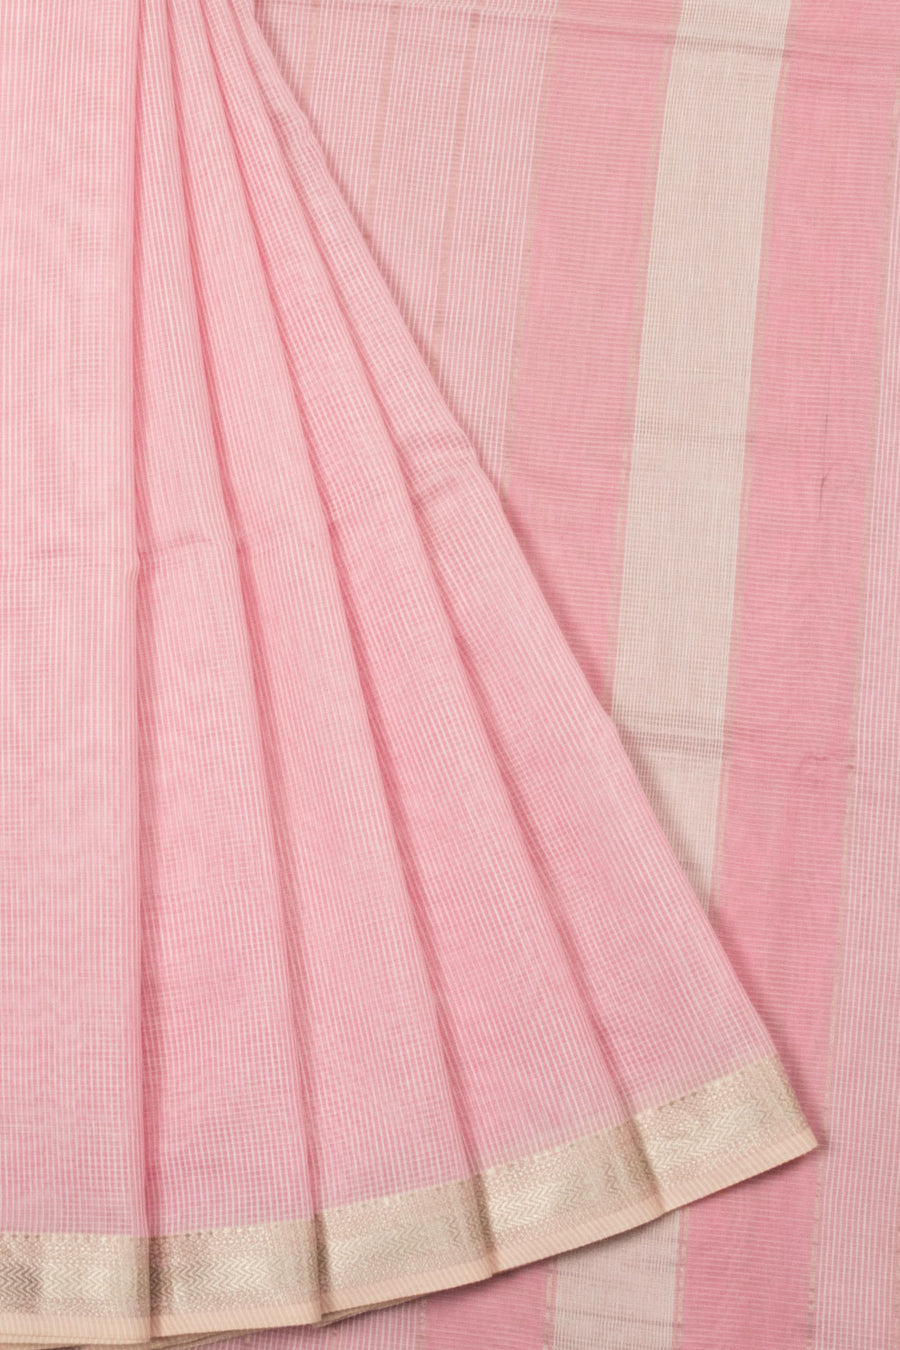 Pink Handloom Maheshwari Silk Cotton Saree - Avishya 